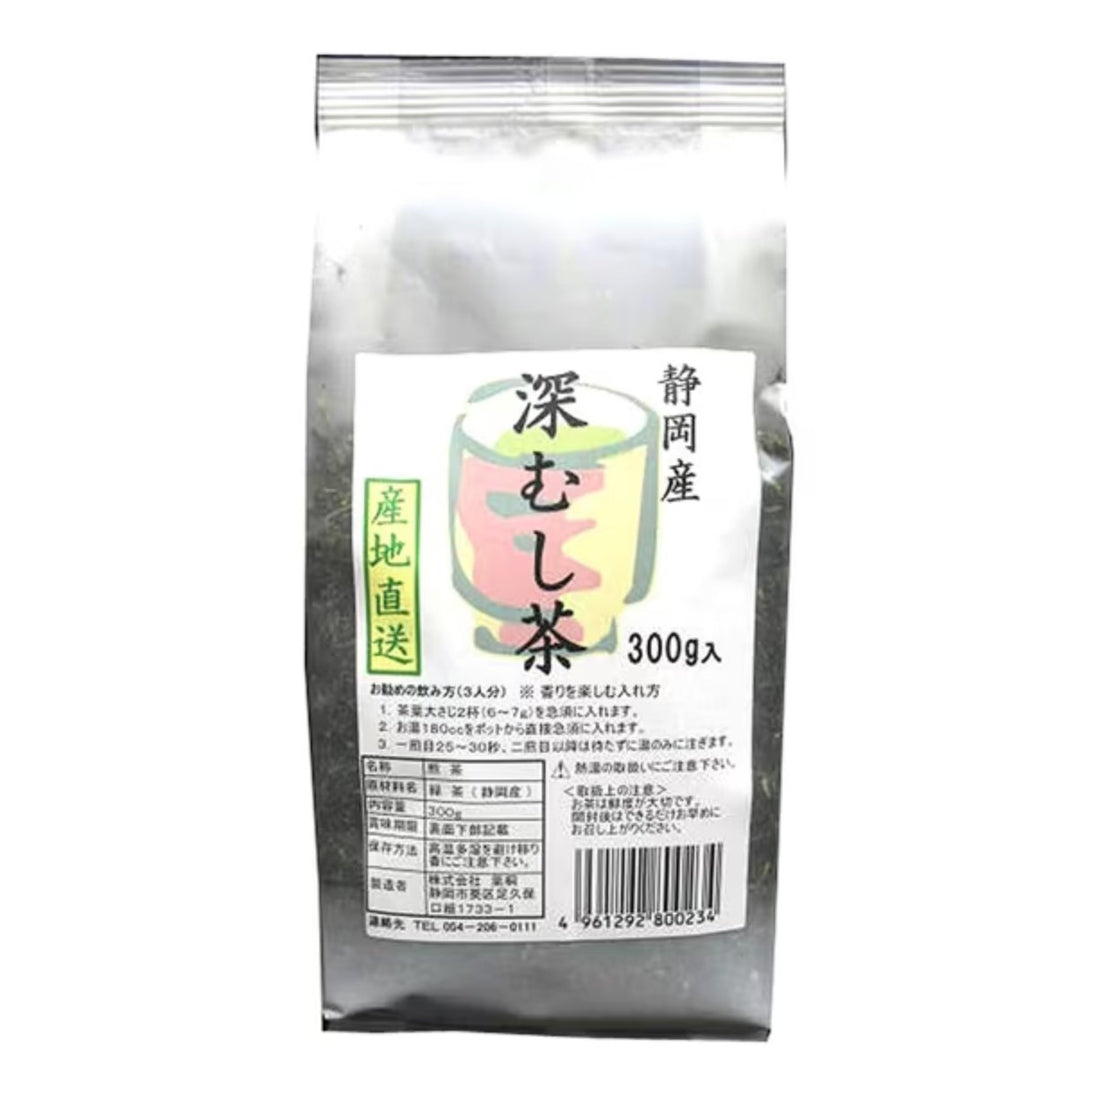 Hagiri Shizuoka-produced deep steamed tea 300g - NihonMura